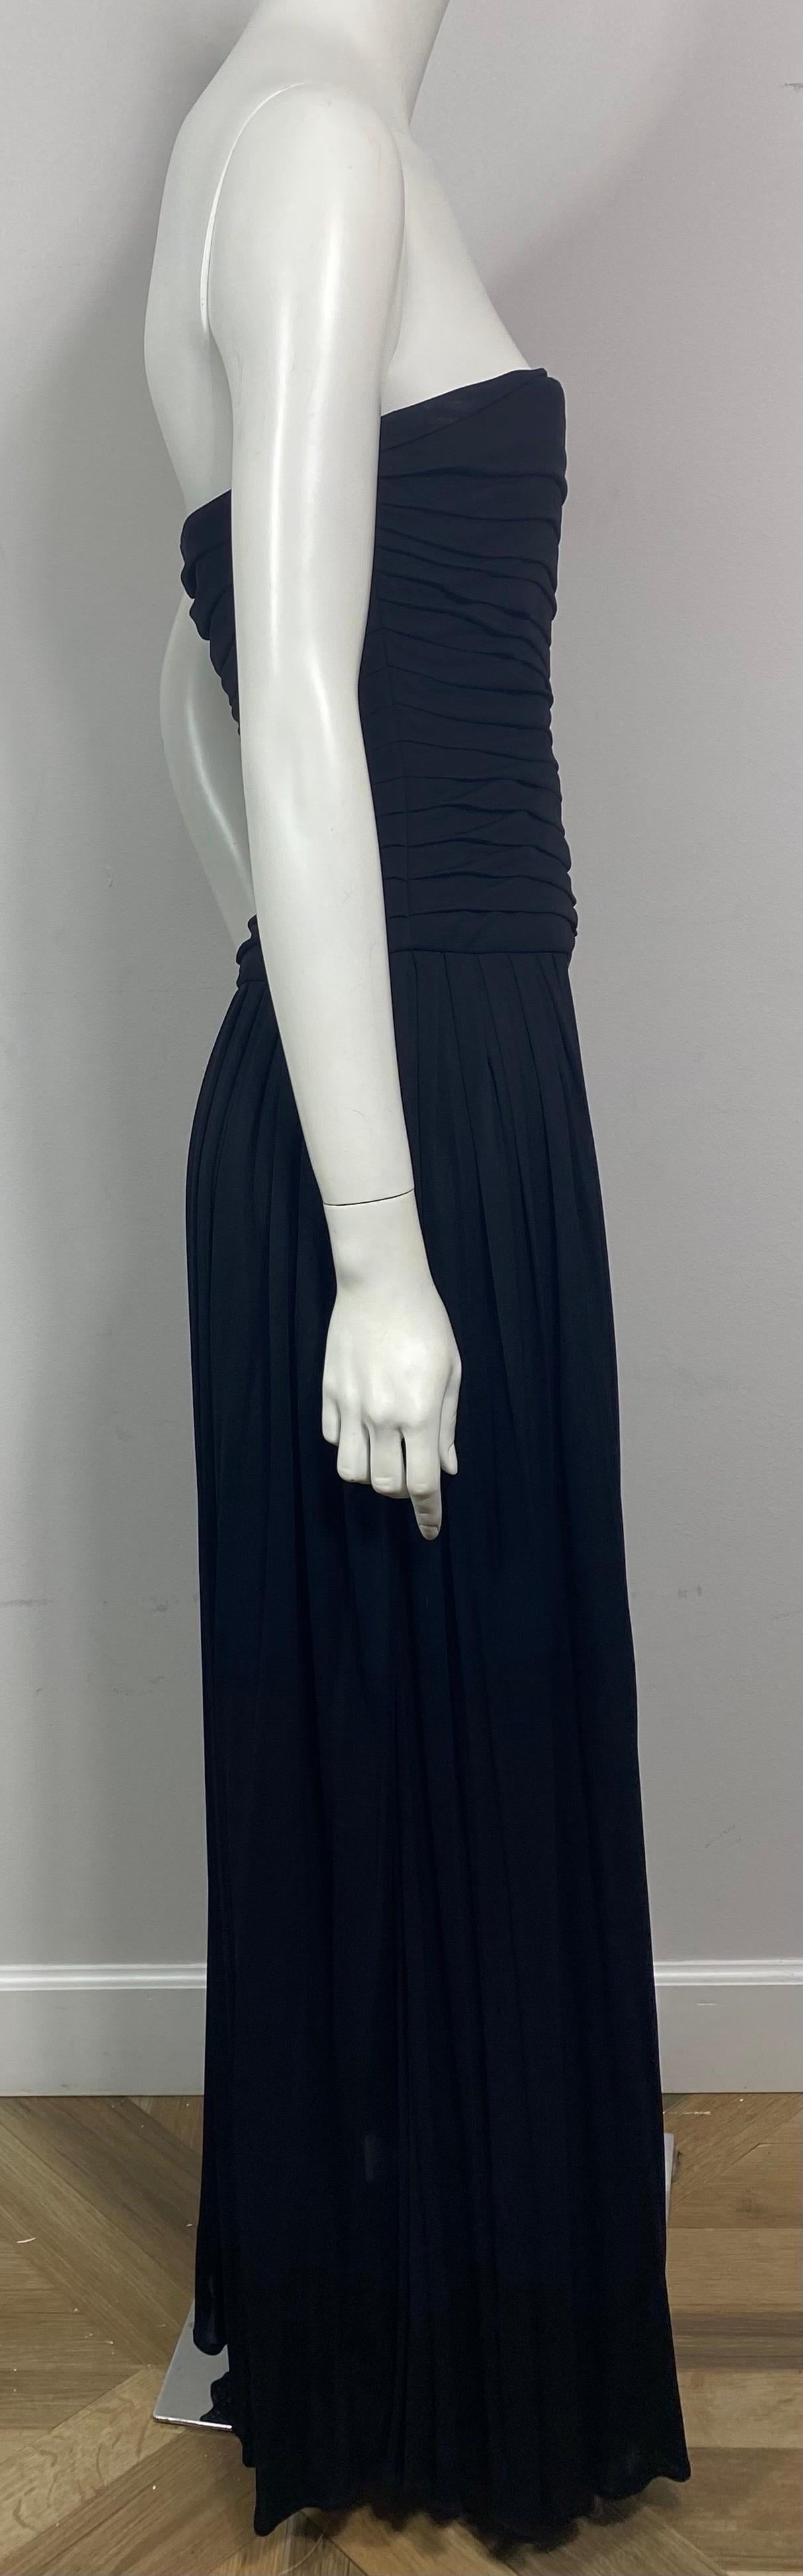 Lanvin 1970’s Black Shutter Pleat Matte Jersey Strapless Long Dress-Size 40 For Sale 2